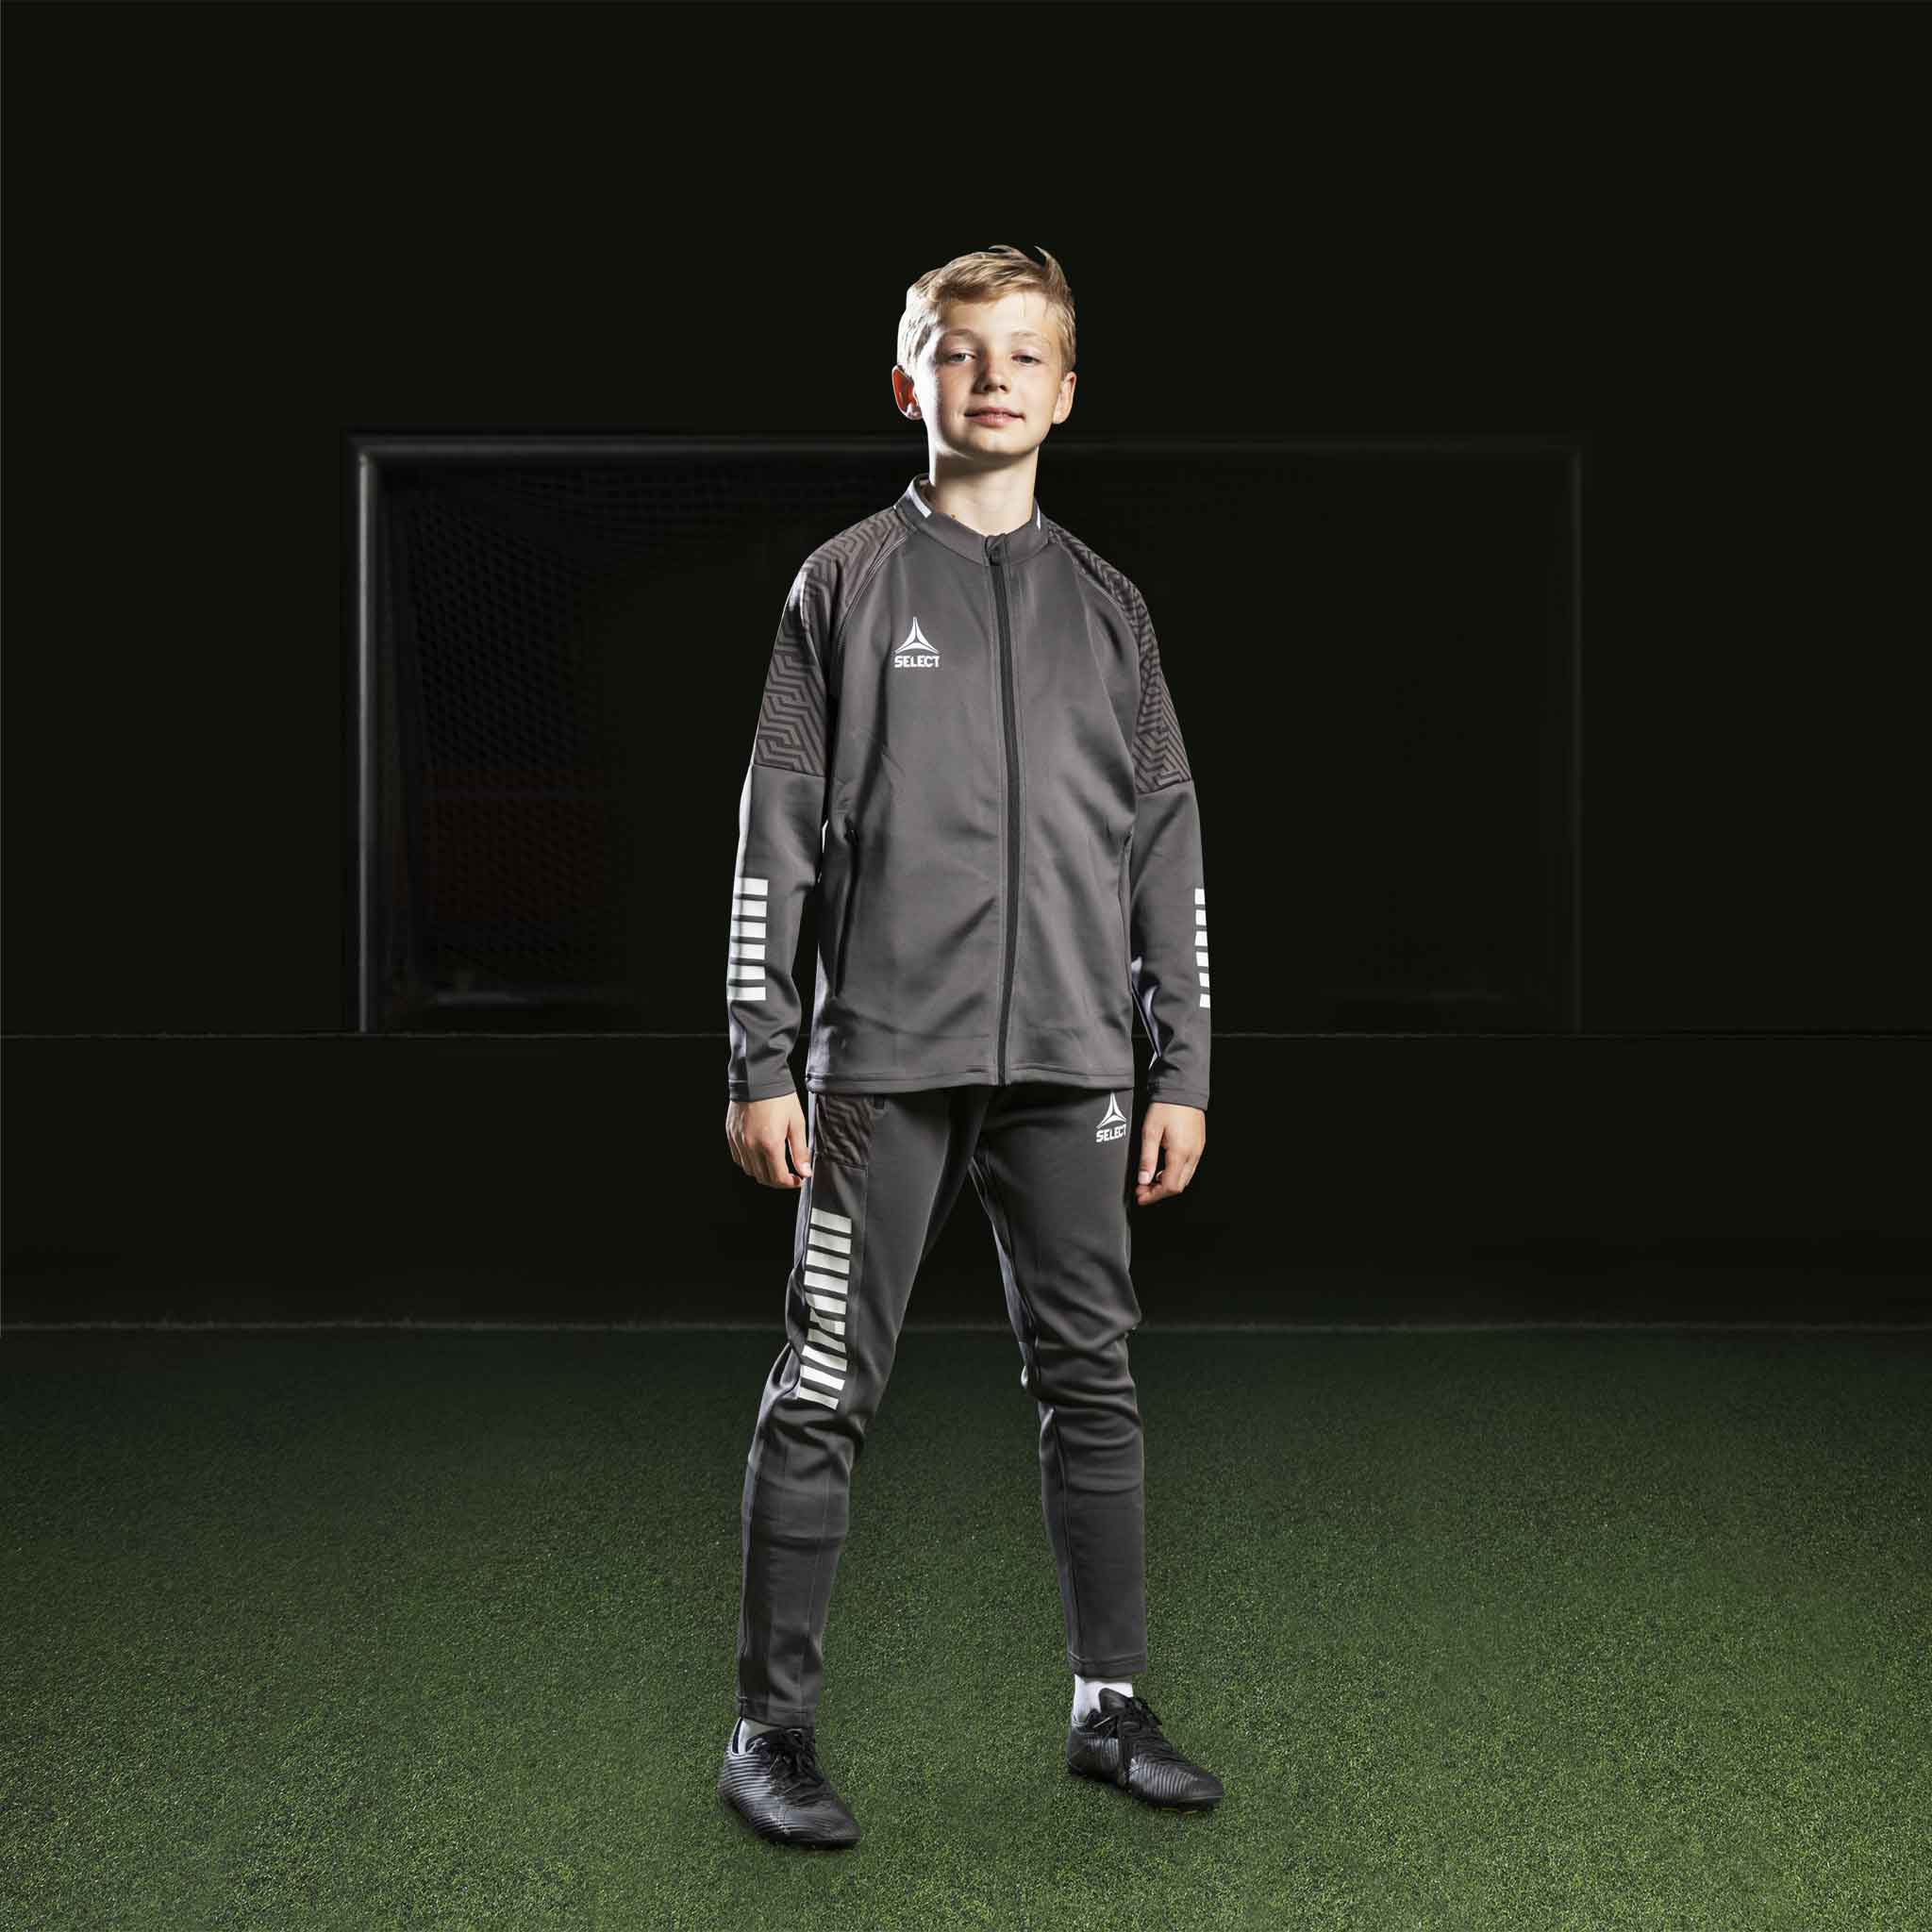 Monaco Zip træningsjakke - Børn #farve_grey/white